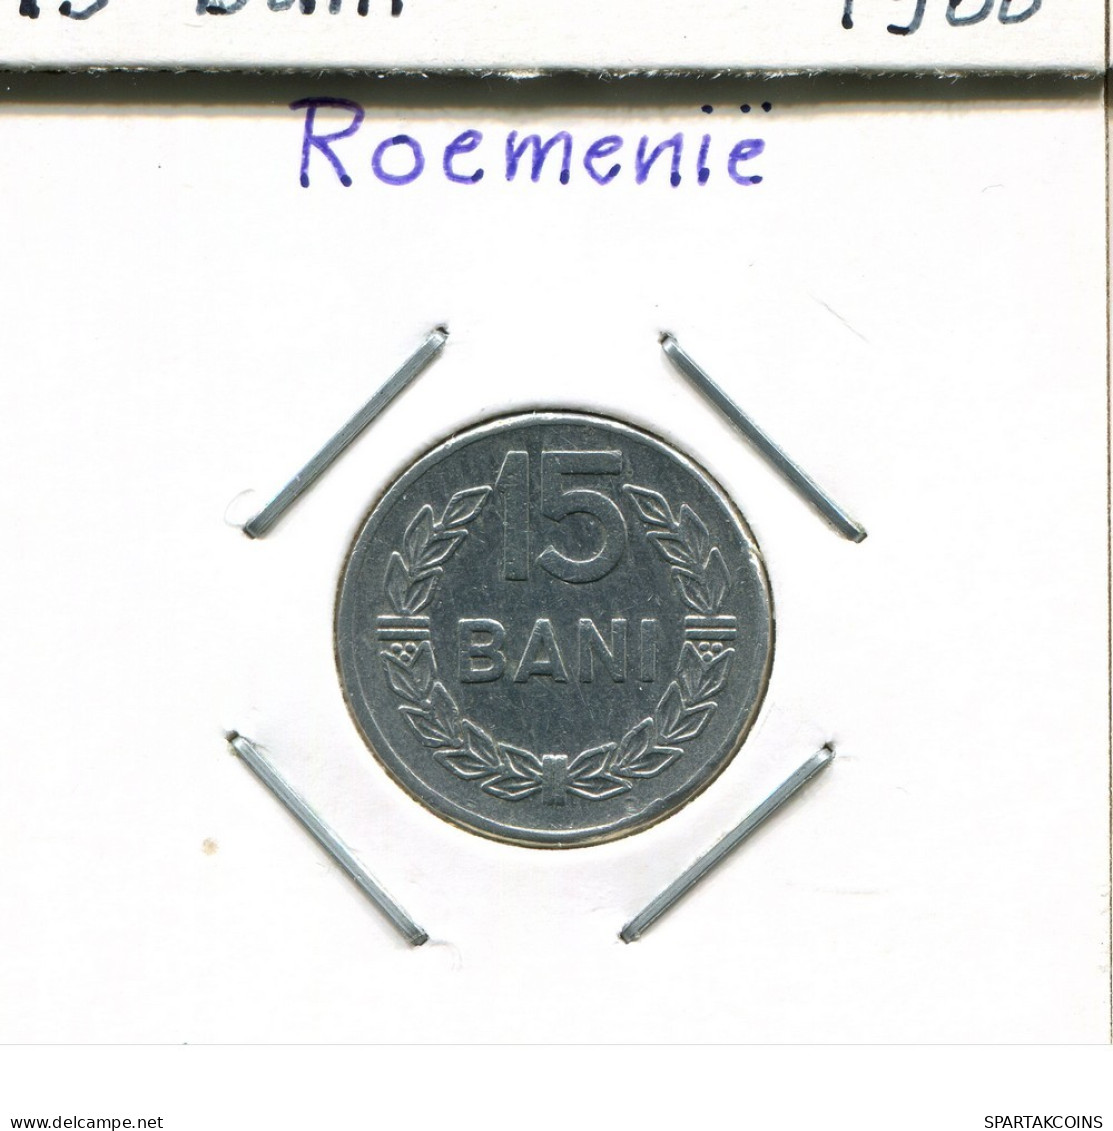 15 BANI 1975 ROMANIA Coin #AP650.2.U.A - Romania